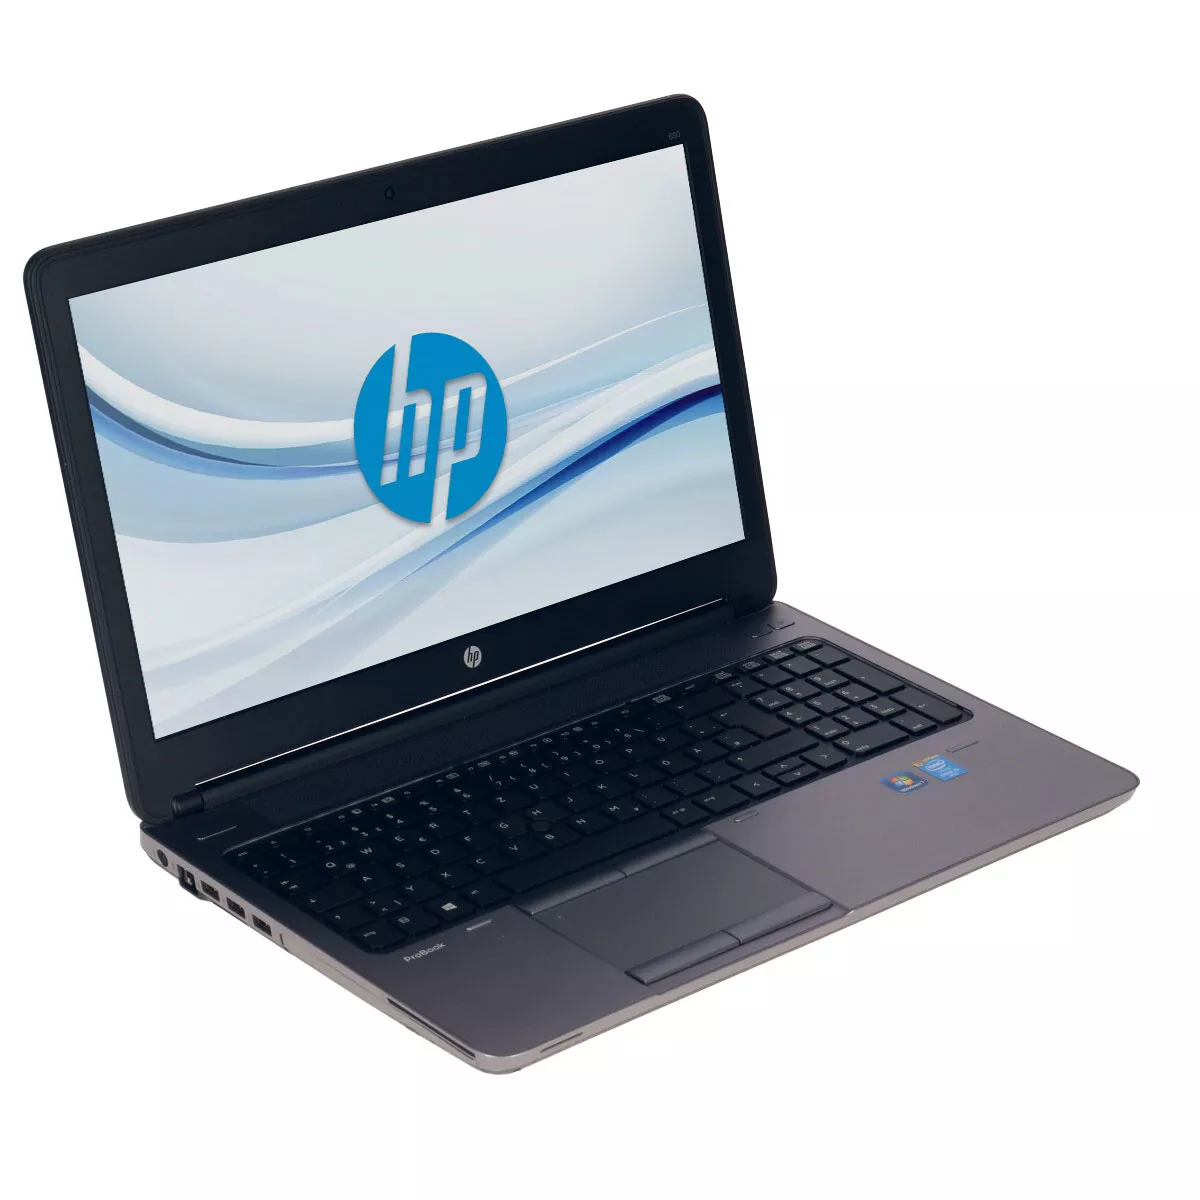 HP ProBook 650 G1 Core i5 4310M 2,7 GHz 8 GB 128 GB Webcam